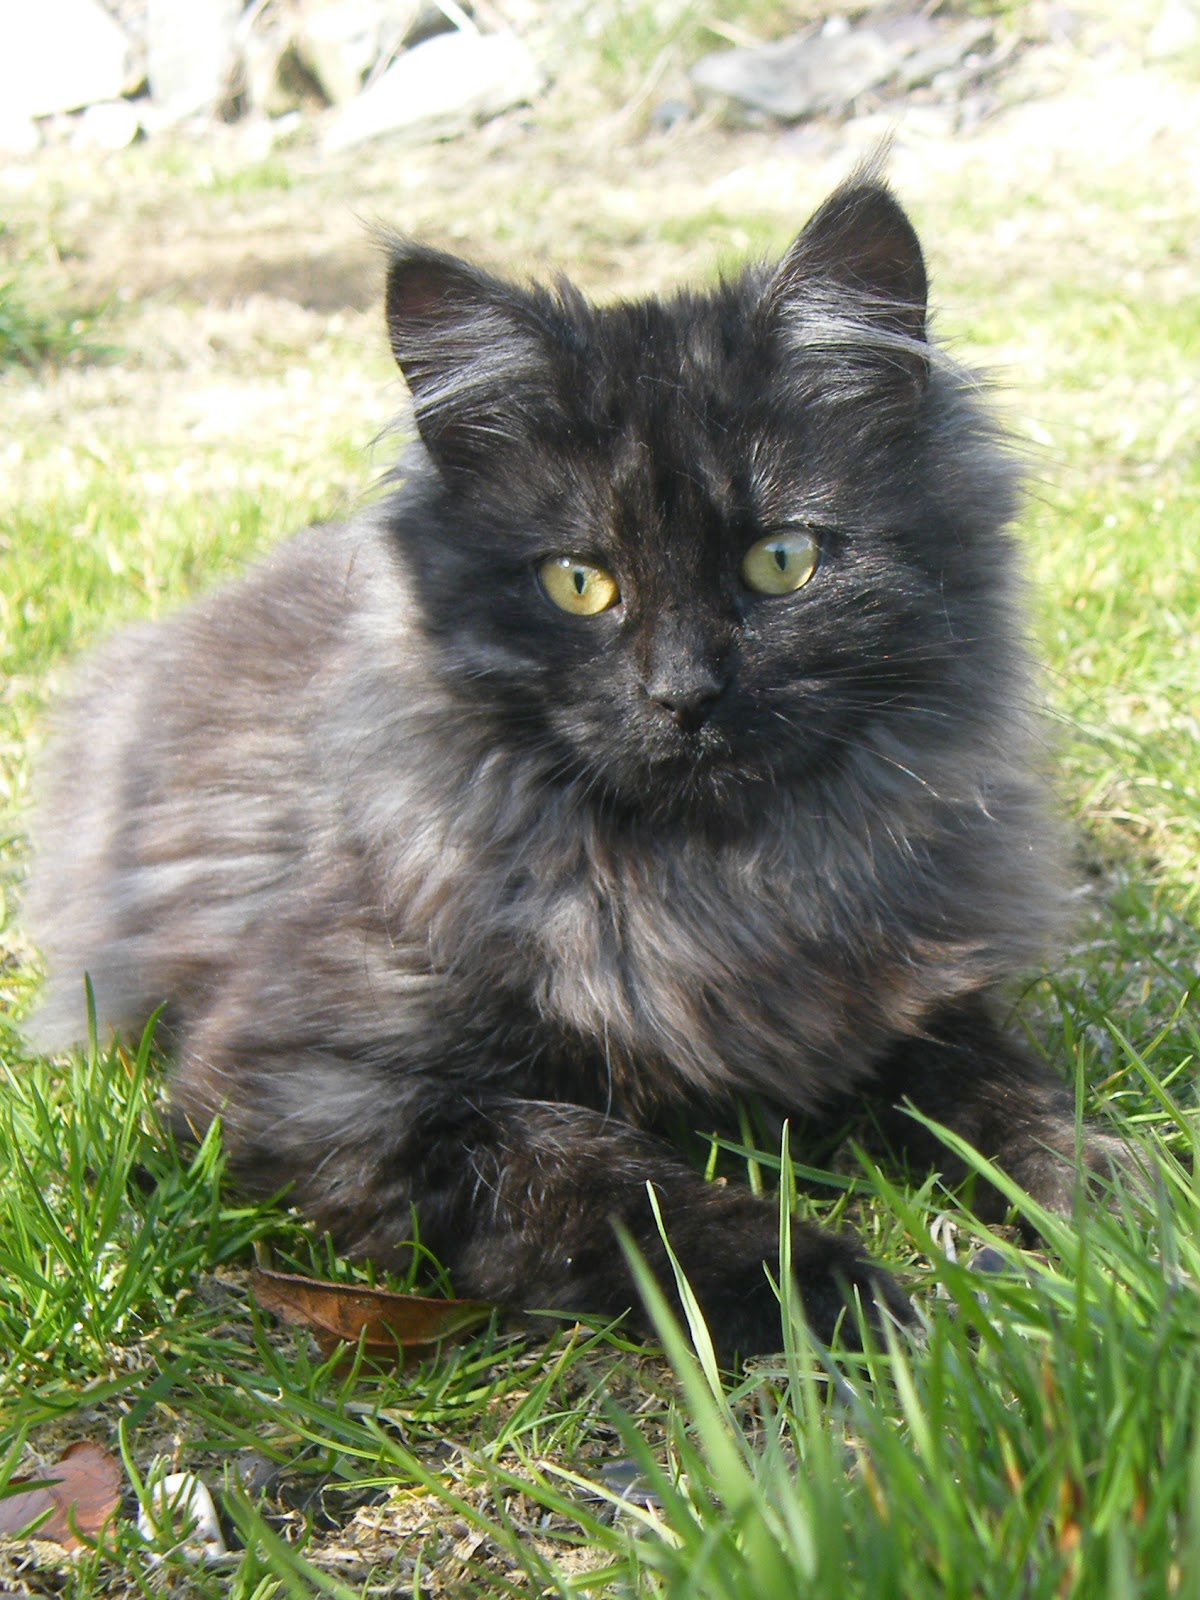 Tali's Tails: Black Smoke Cat ... Now Enjoying Being Outside